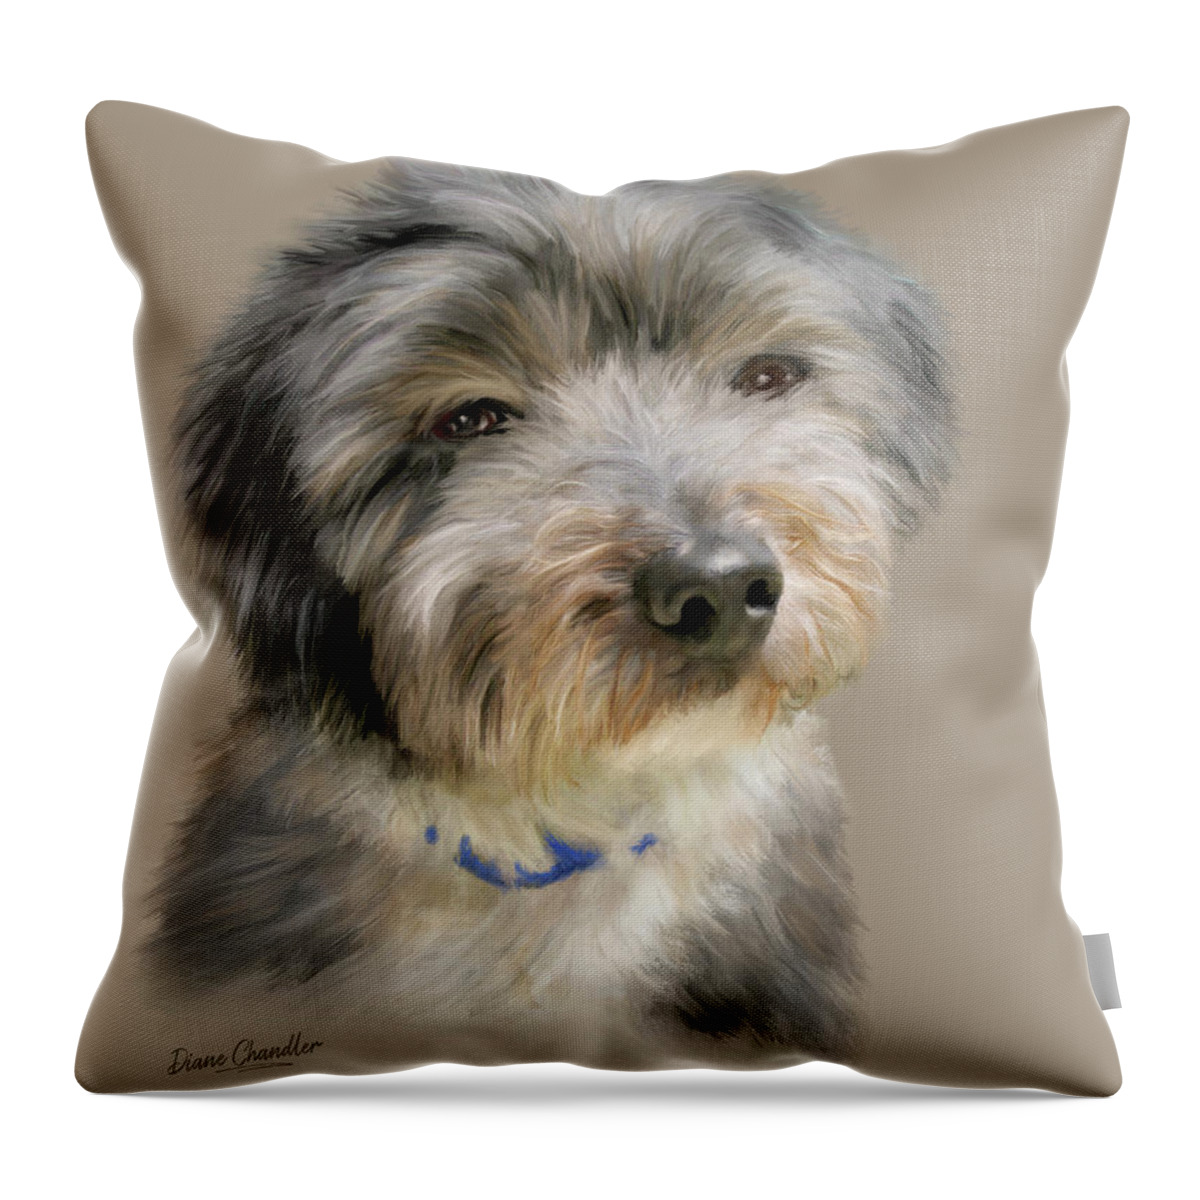 Puppy Throw Pillow featuring the digital art Havanese Puppy by Diane Chandler